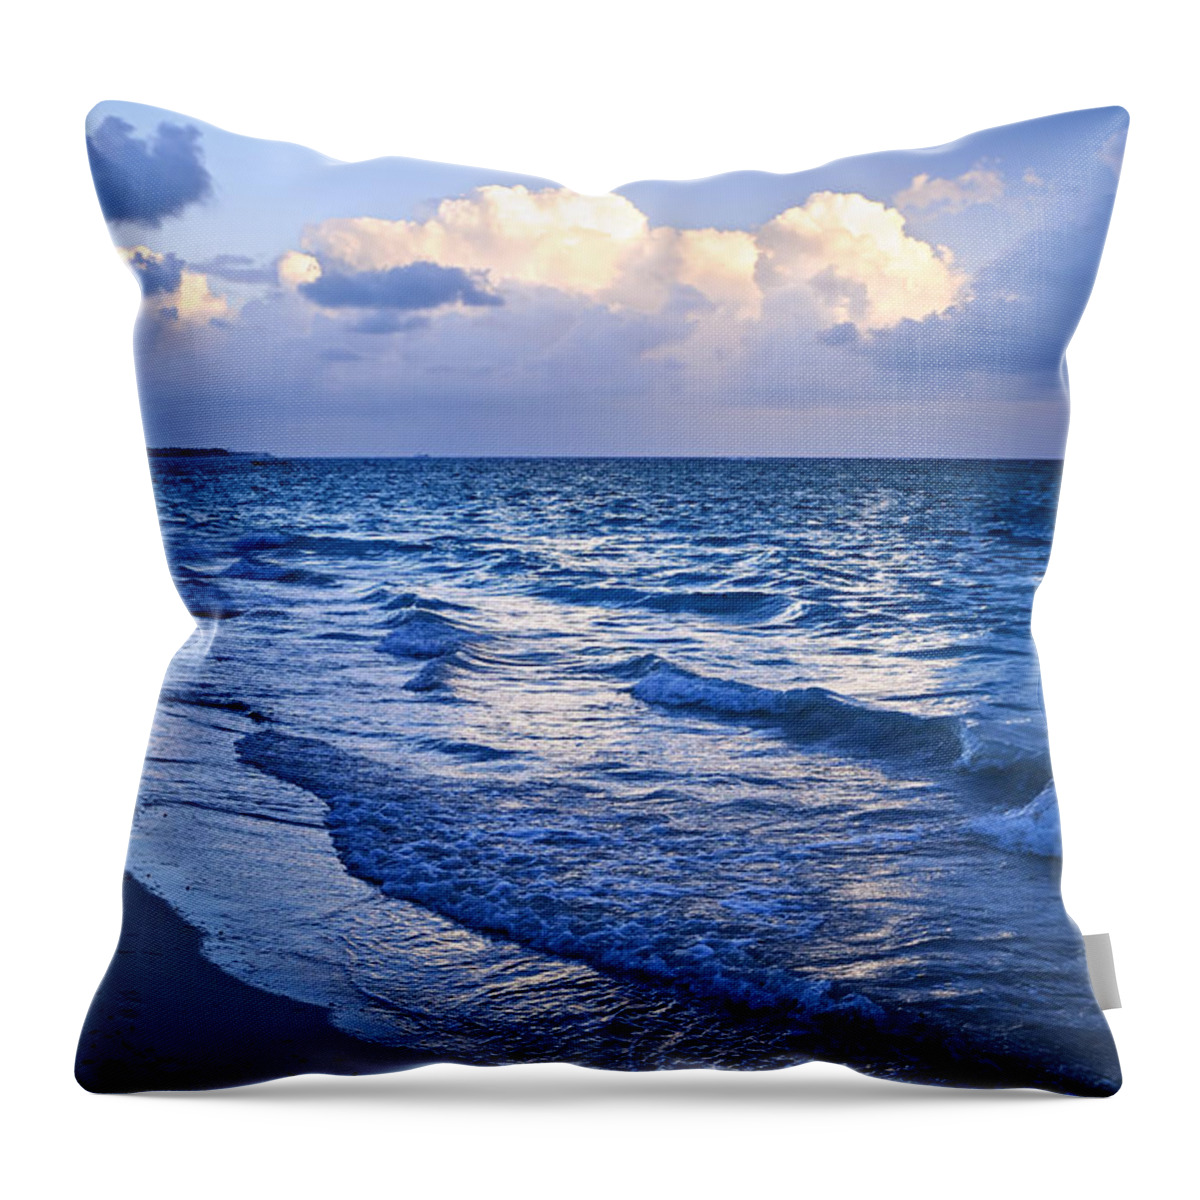 Sunrise Throw Pillow featuring the photograph Ocean waves on beach at dusk by Elena Elisseeva